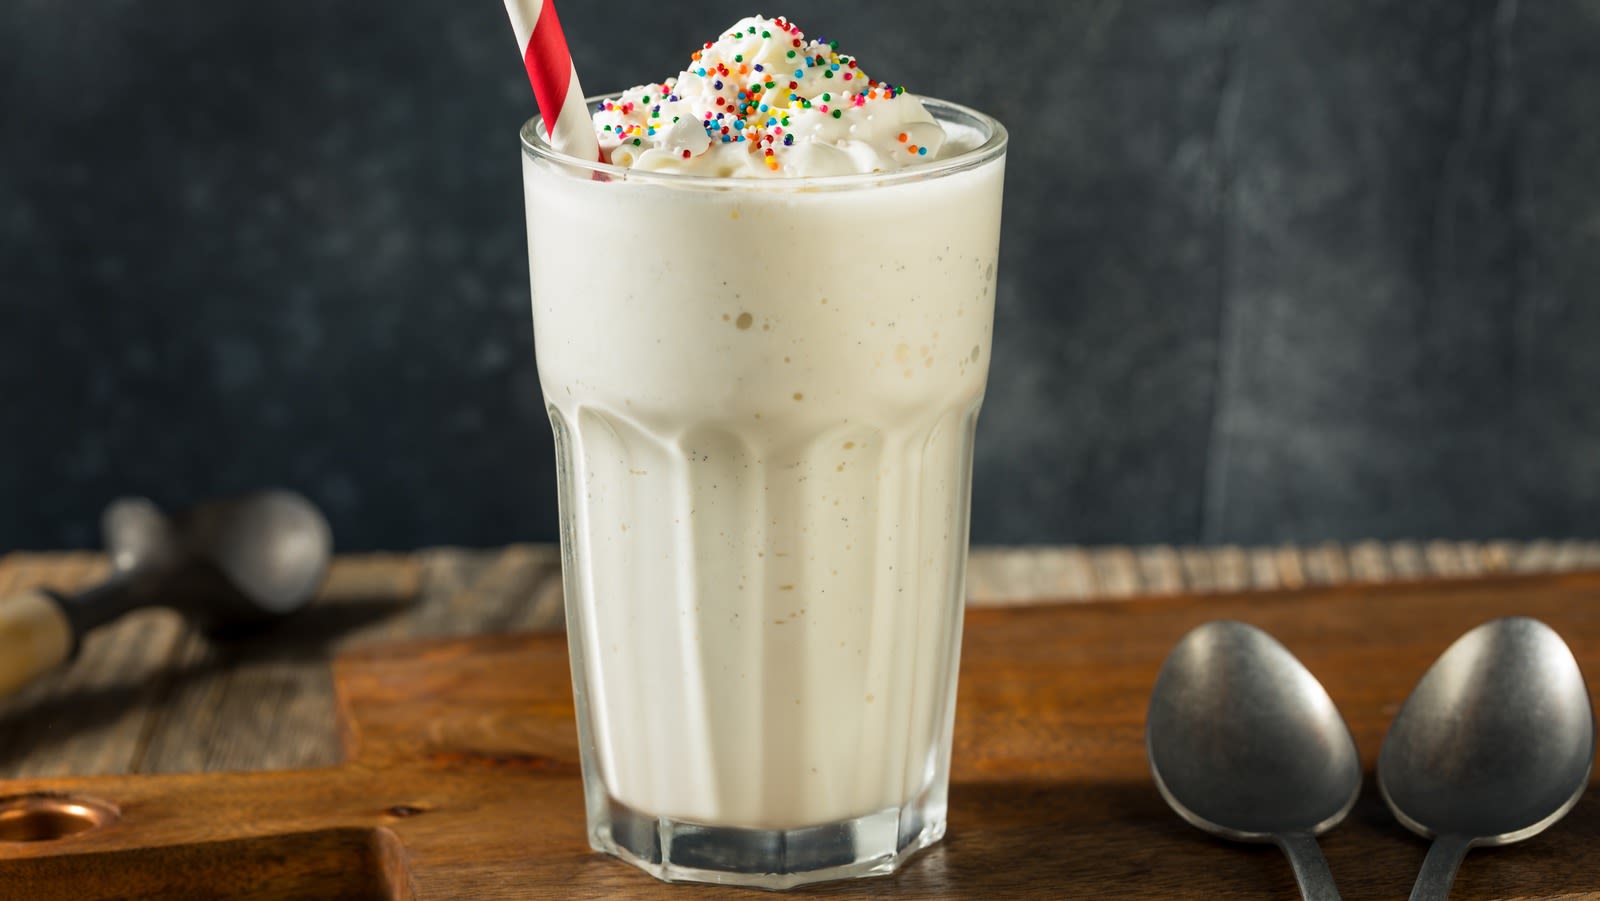 Original Vanilla Milkshake Recipes Were Intended As Alcoholic Drinks